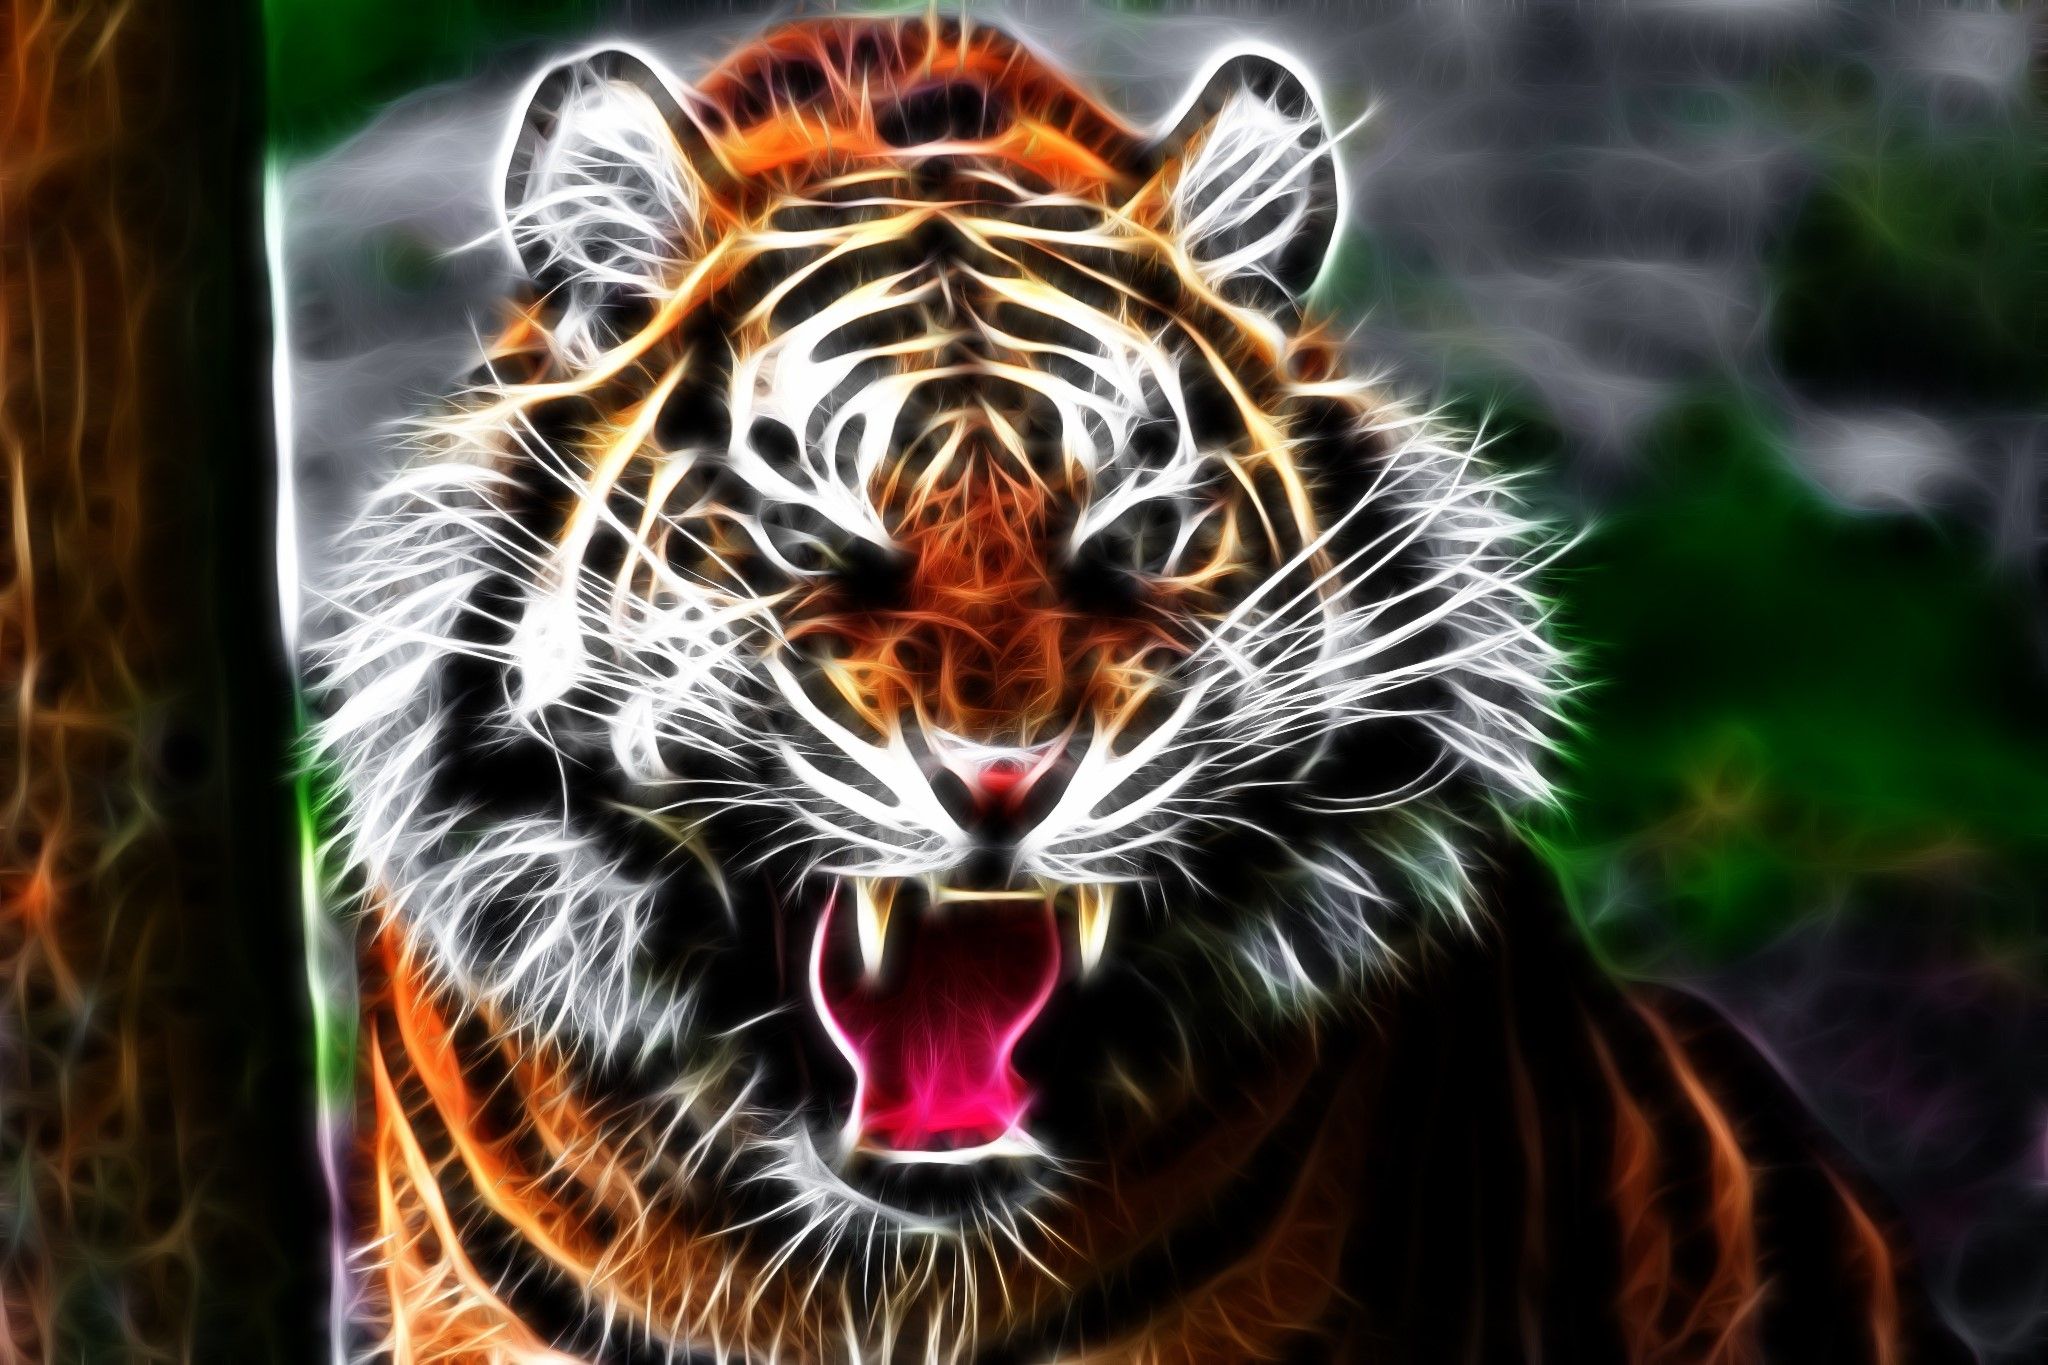 Tiger face, Aggression, Teeth, Lines .tokkoro.com